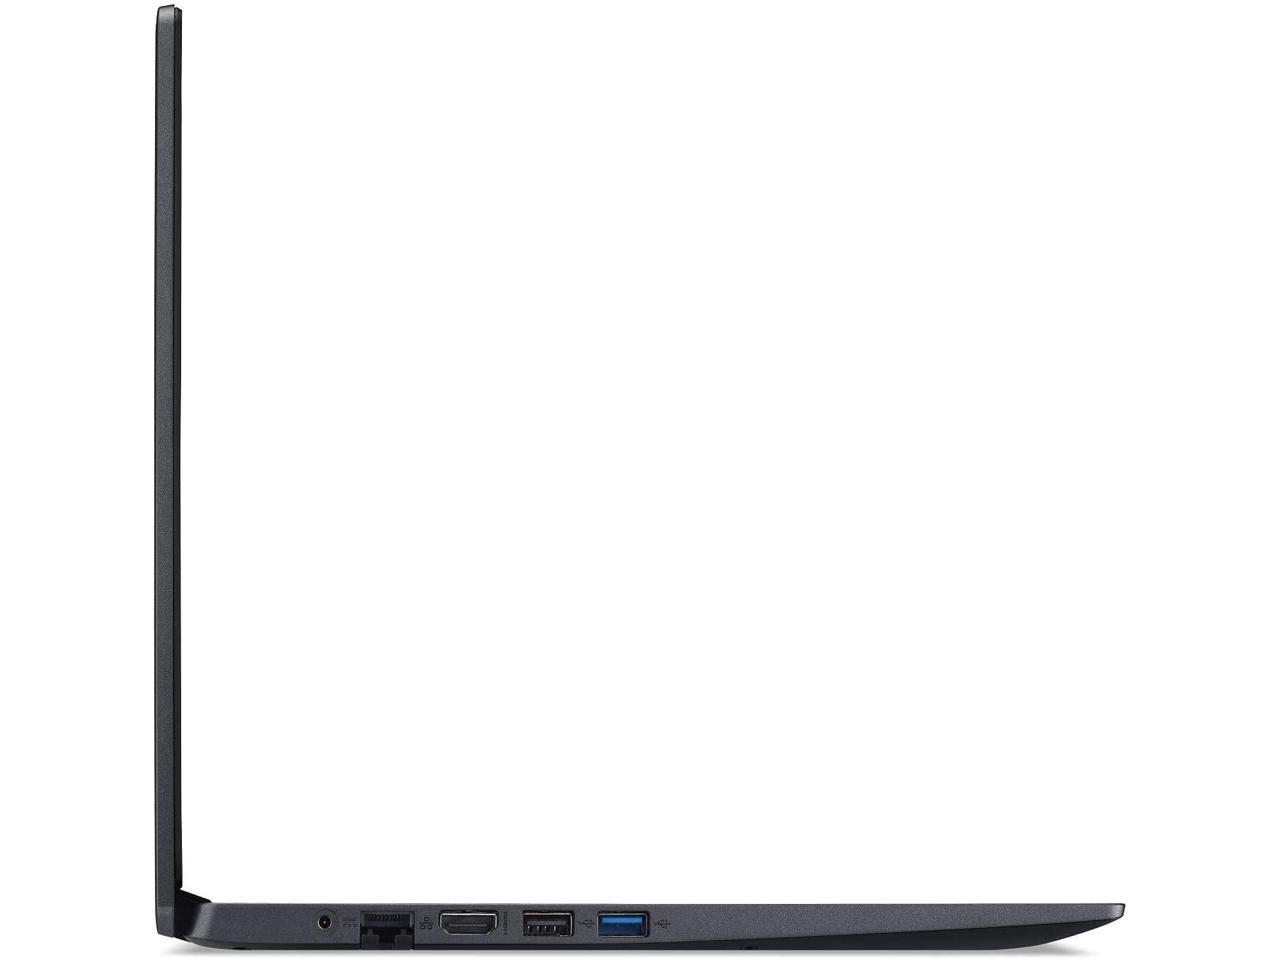 Acer Aspire 15.6-inch FHD(1920x1080) Laptop PC, Intel Celeron N4020 Processor, 4GB DDR4, 64GB eMMC, HDMI, Bluetooth, WiFi, Stereo Speaker, One-Year Office 365 Included, Windows 10 w/Mazery Mousepad